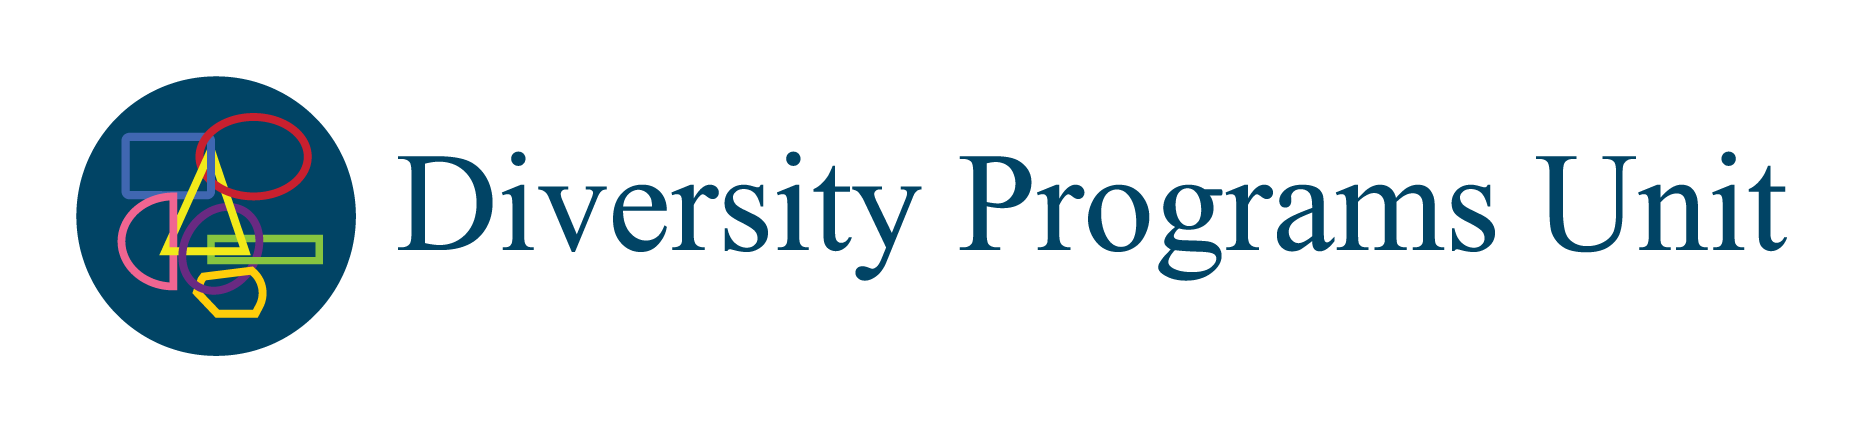 Diversity Programs Unit logo